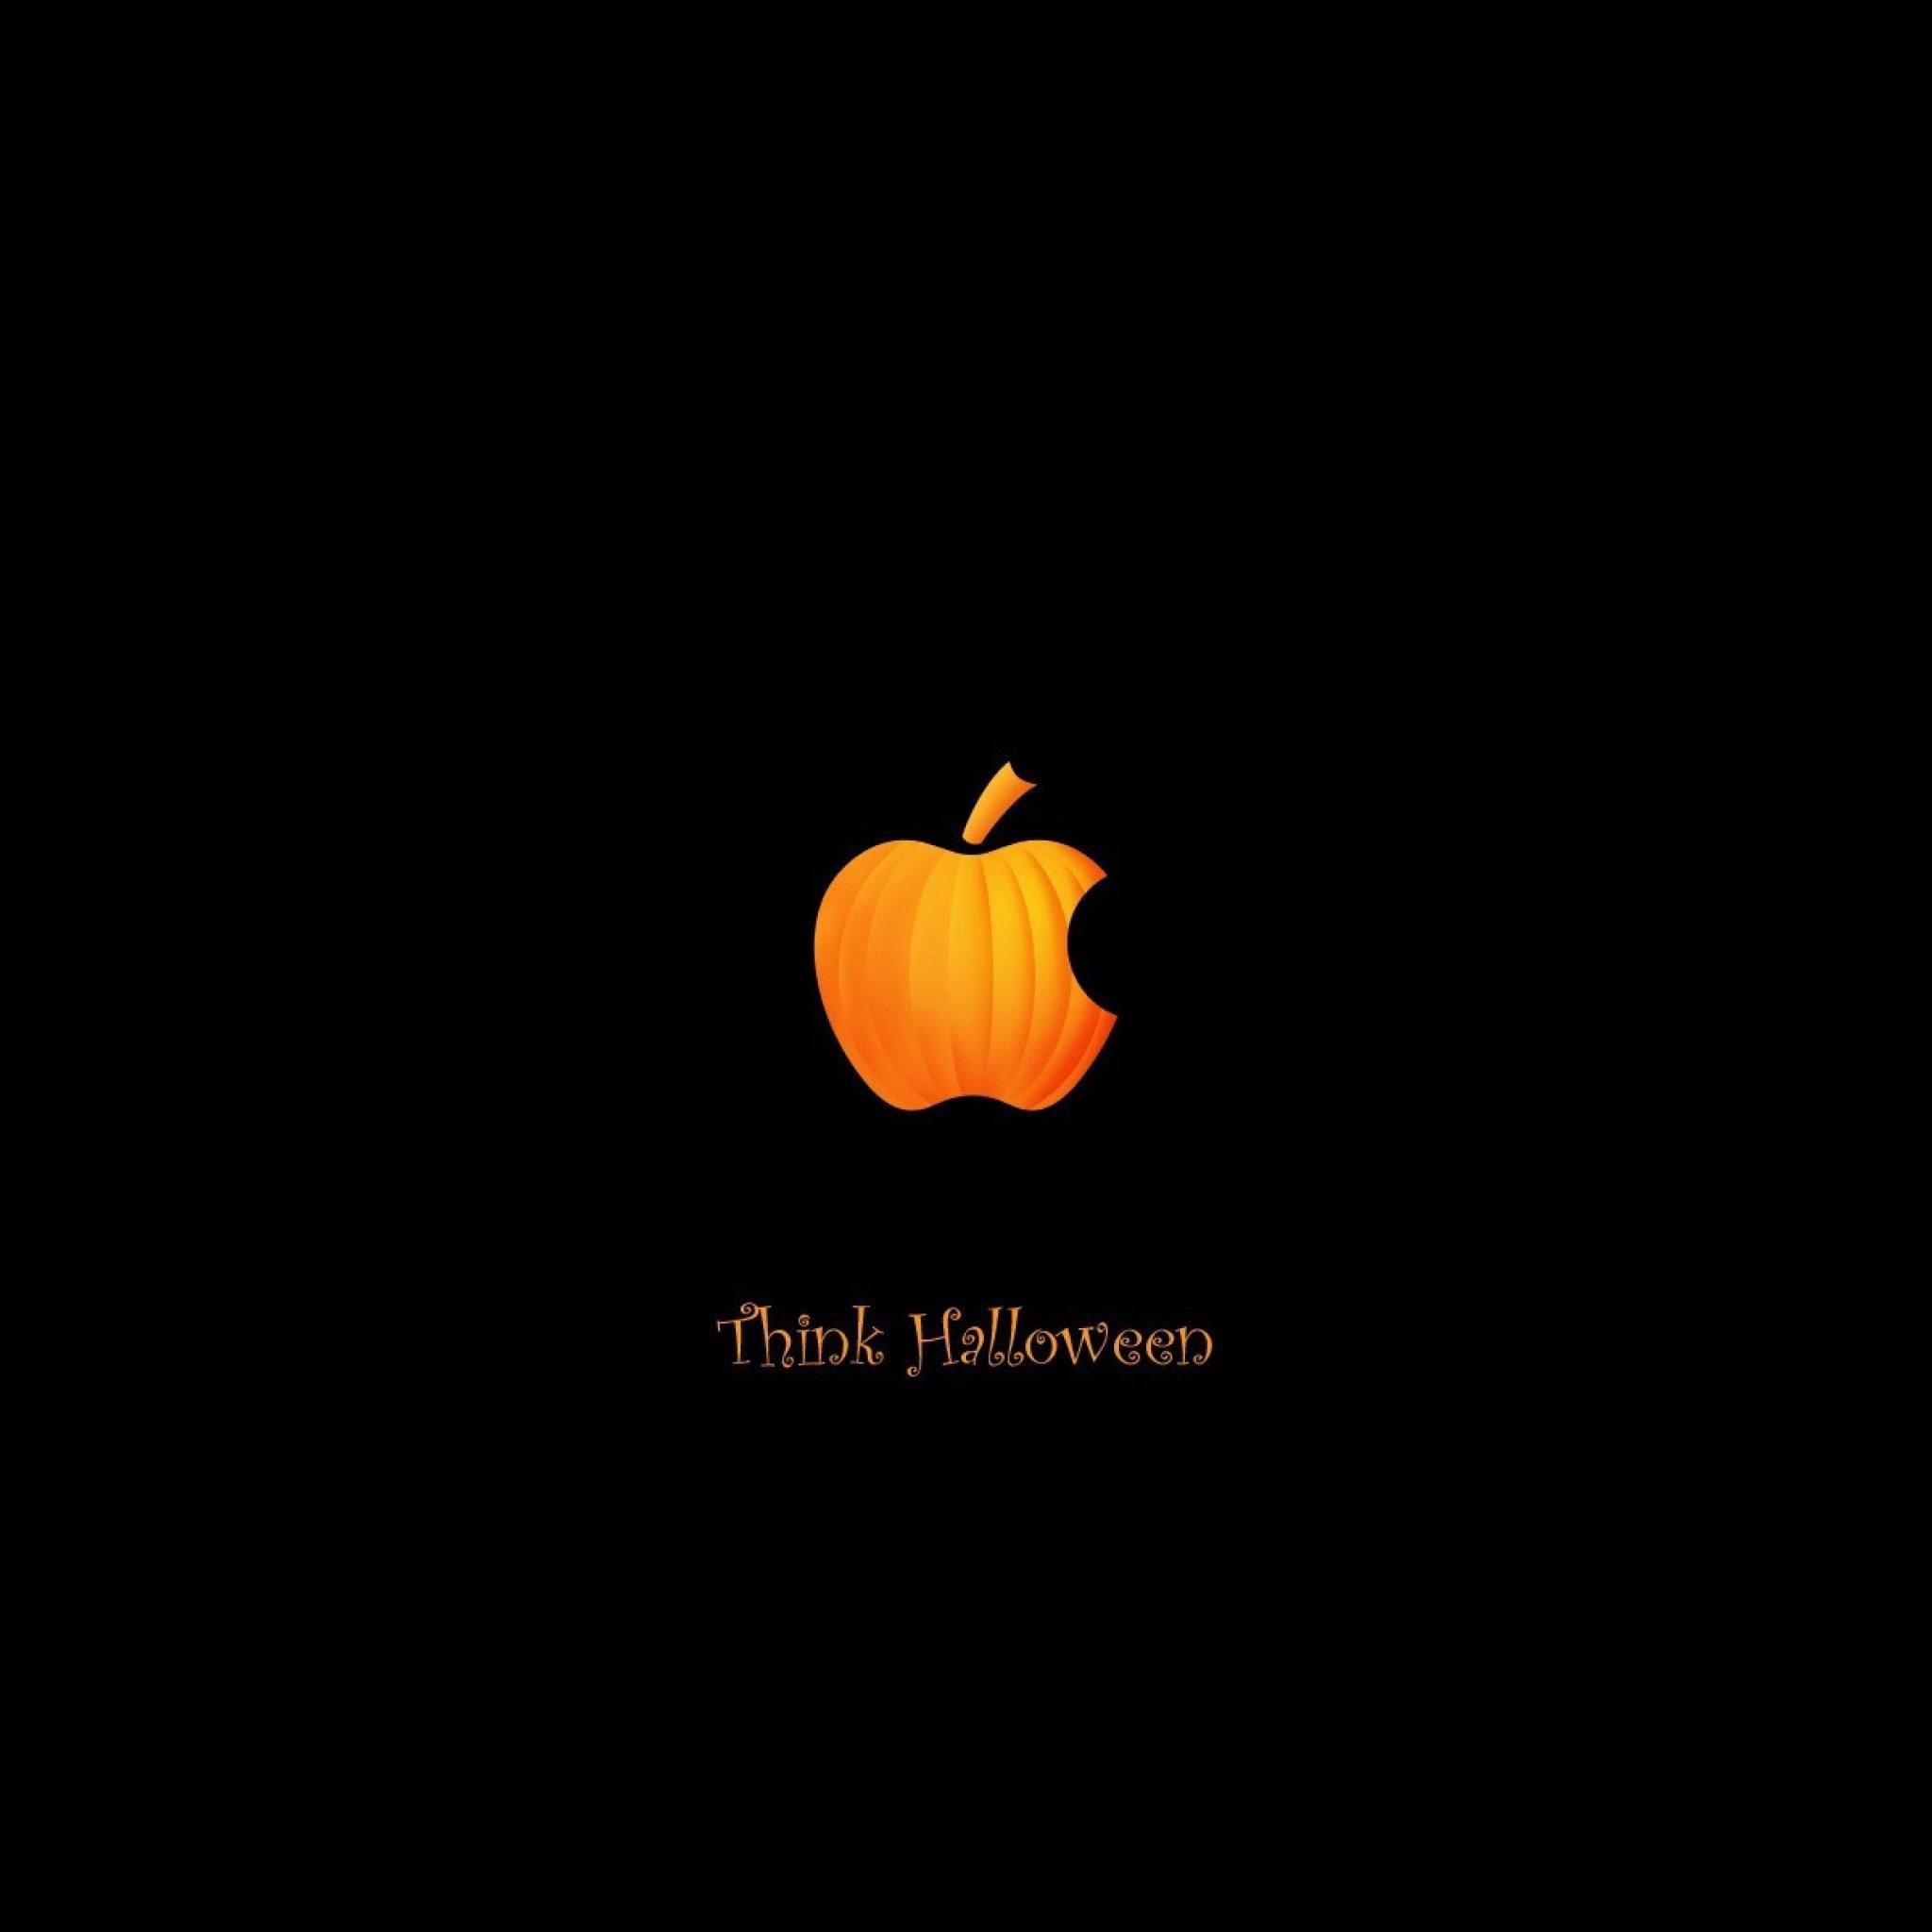 ipad air 2 wallpaper image. Halloween wallpaper, iPad air wallpaper, Halloween backrounds